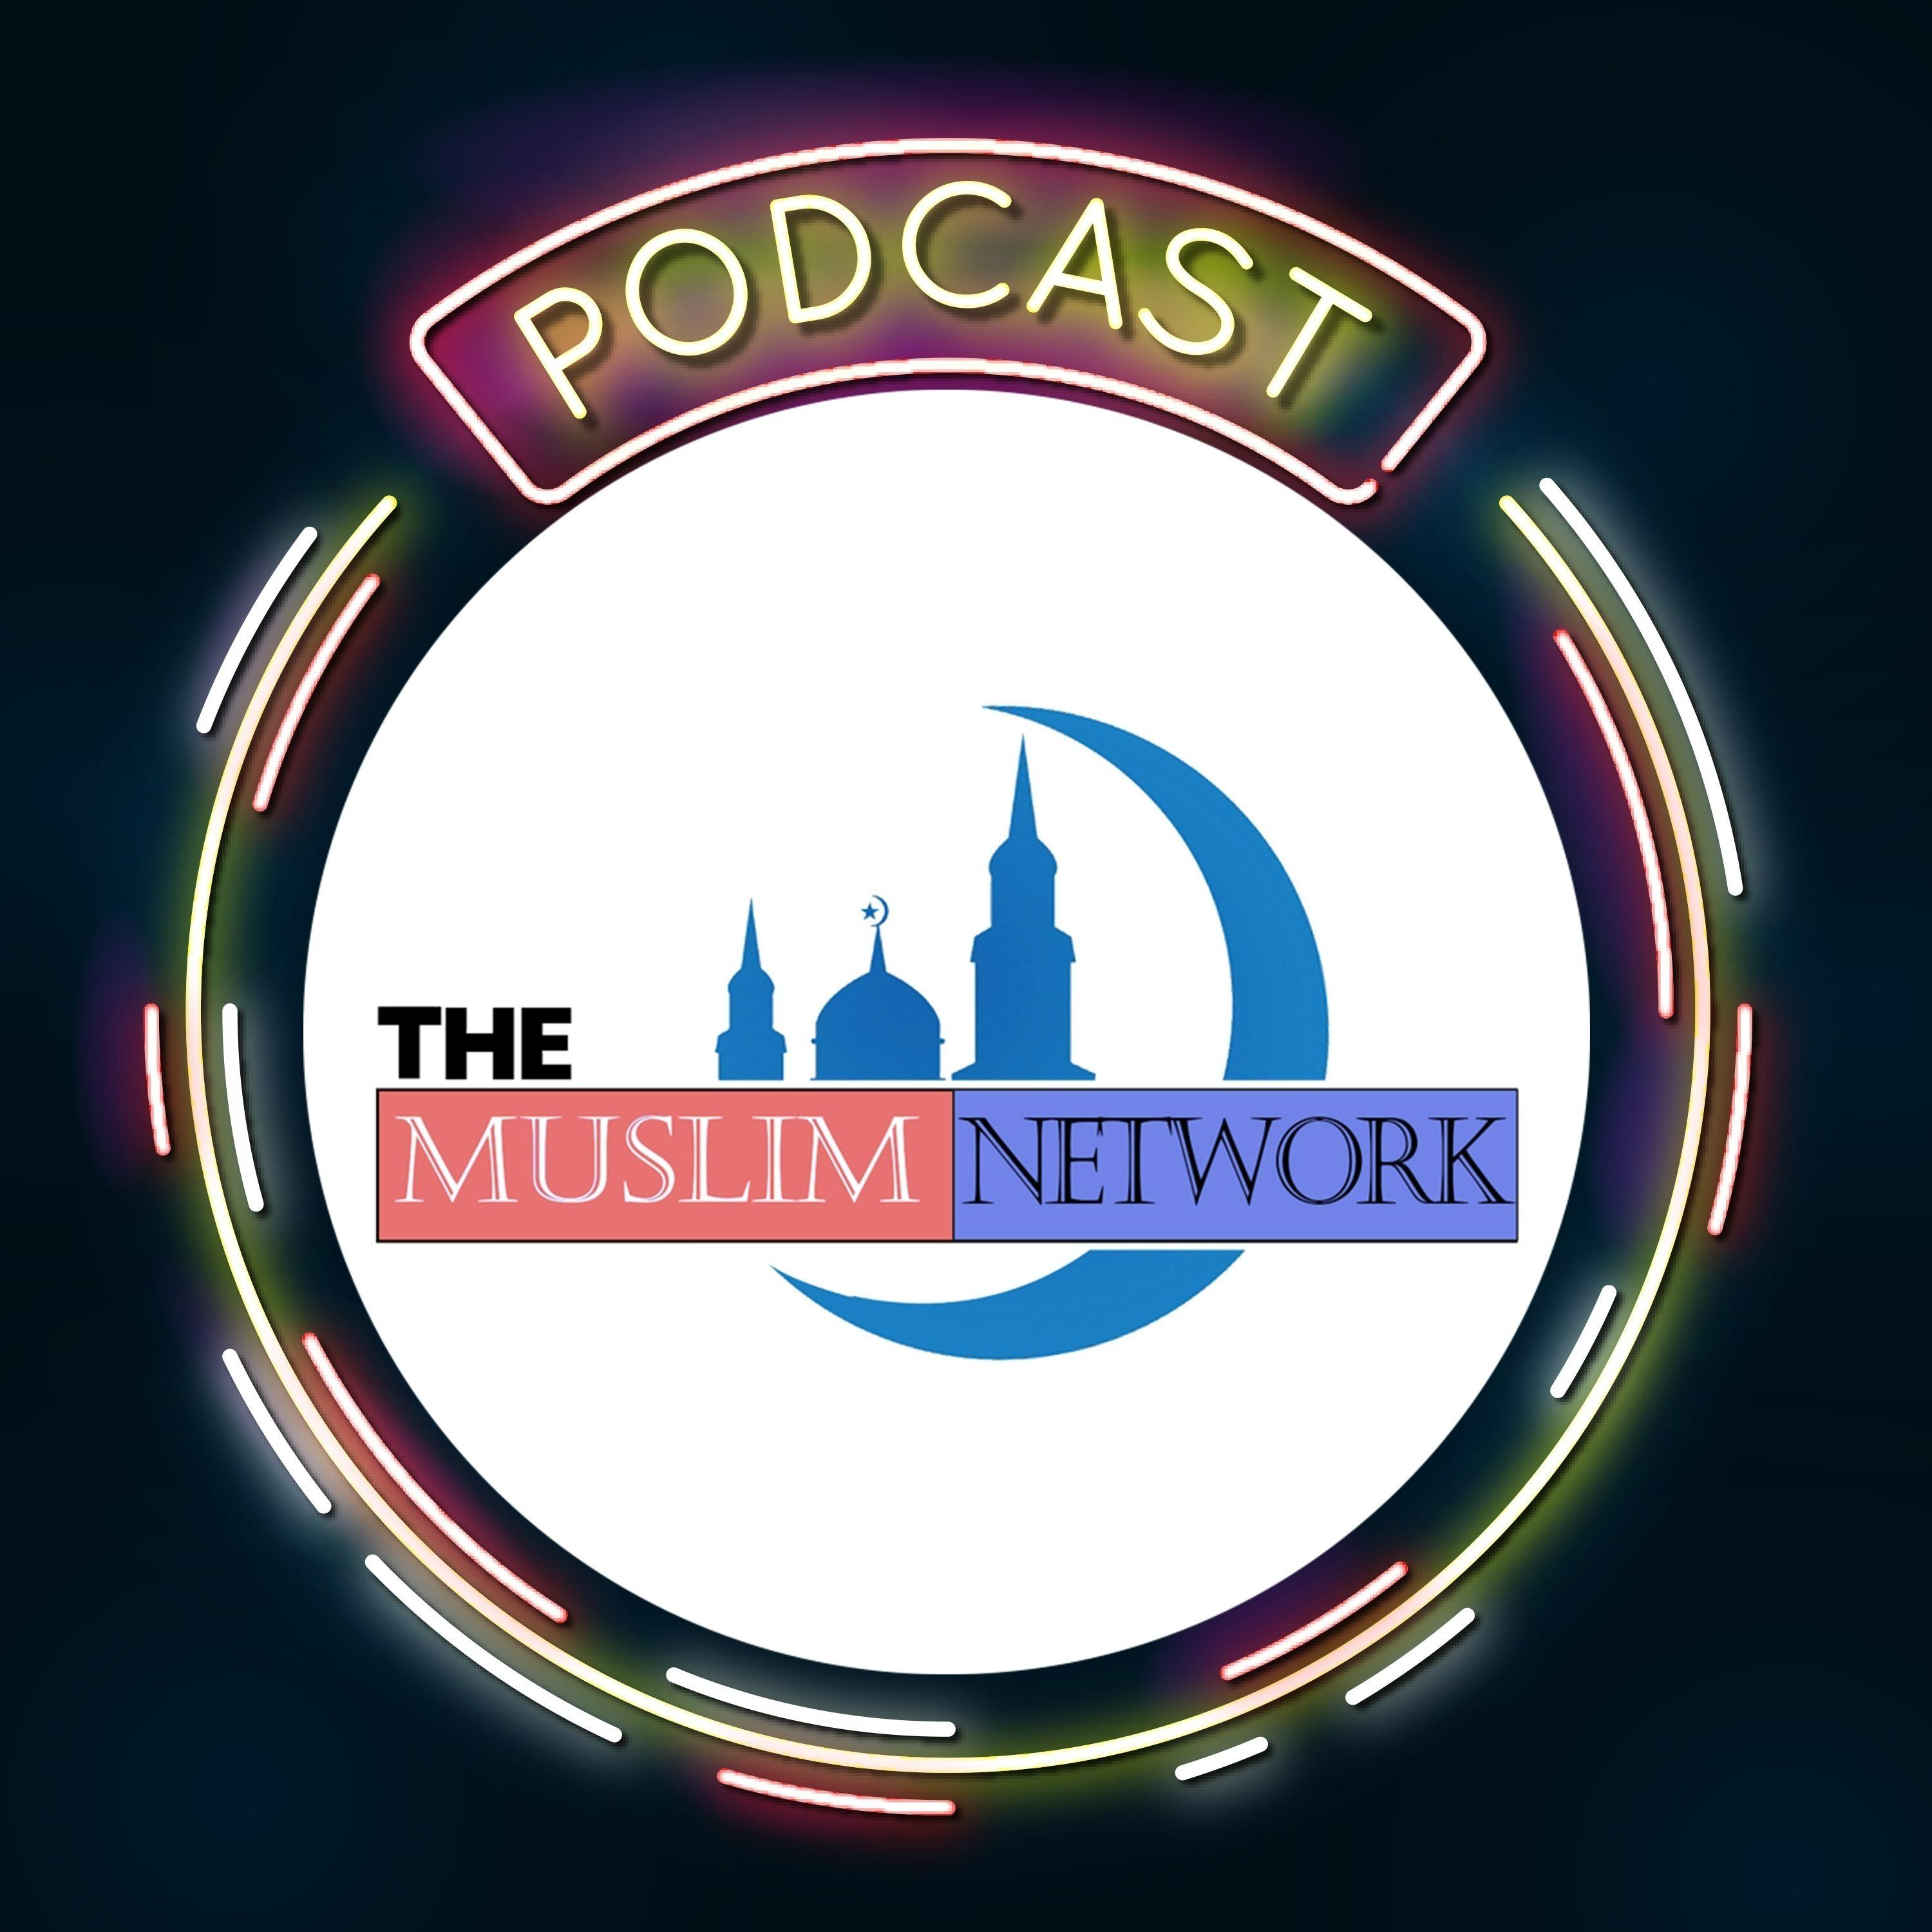 The Muslim Network